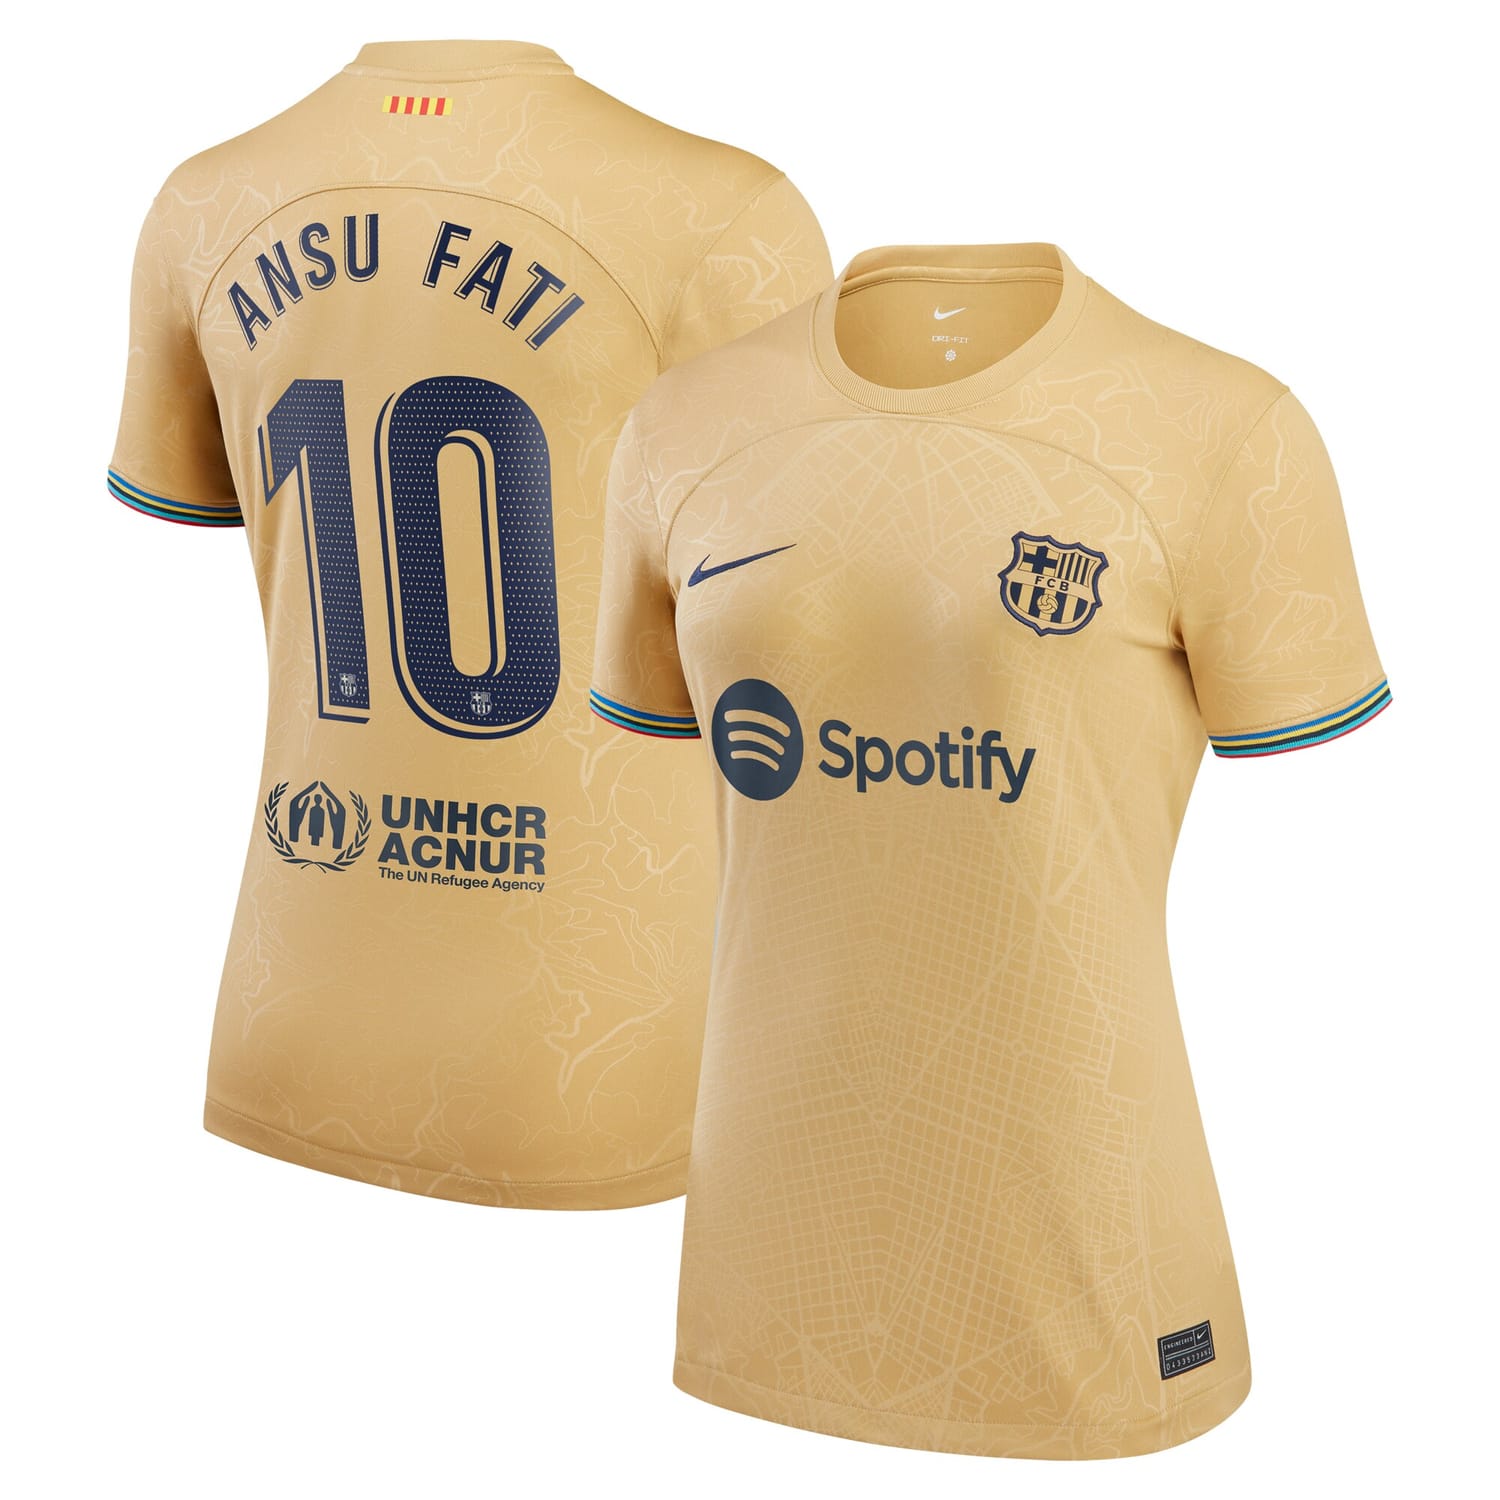 La Liga Barcelona Away Jersey Shirt Yellow 2022-23 player Ansu Fati printing for Women